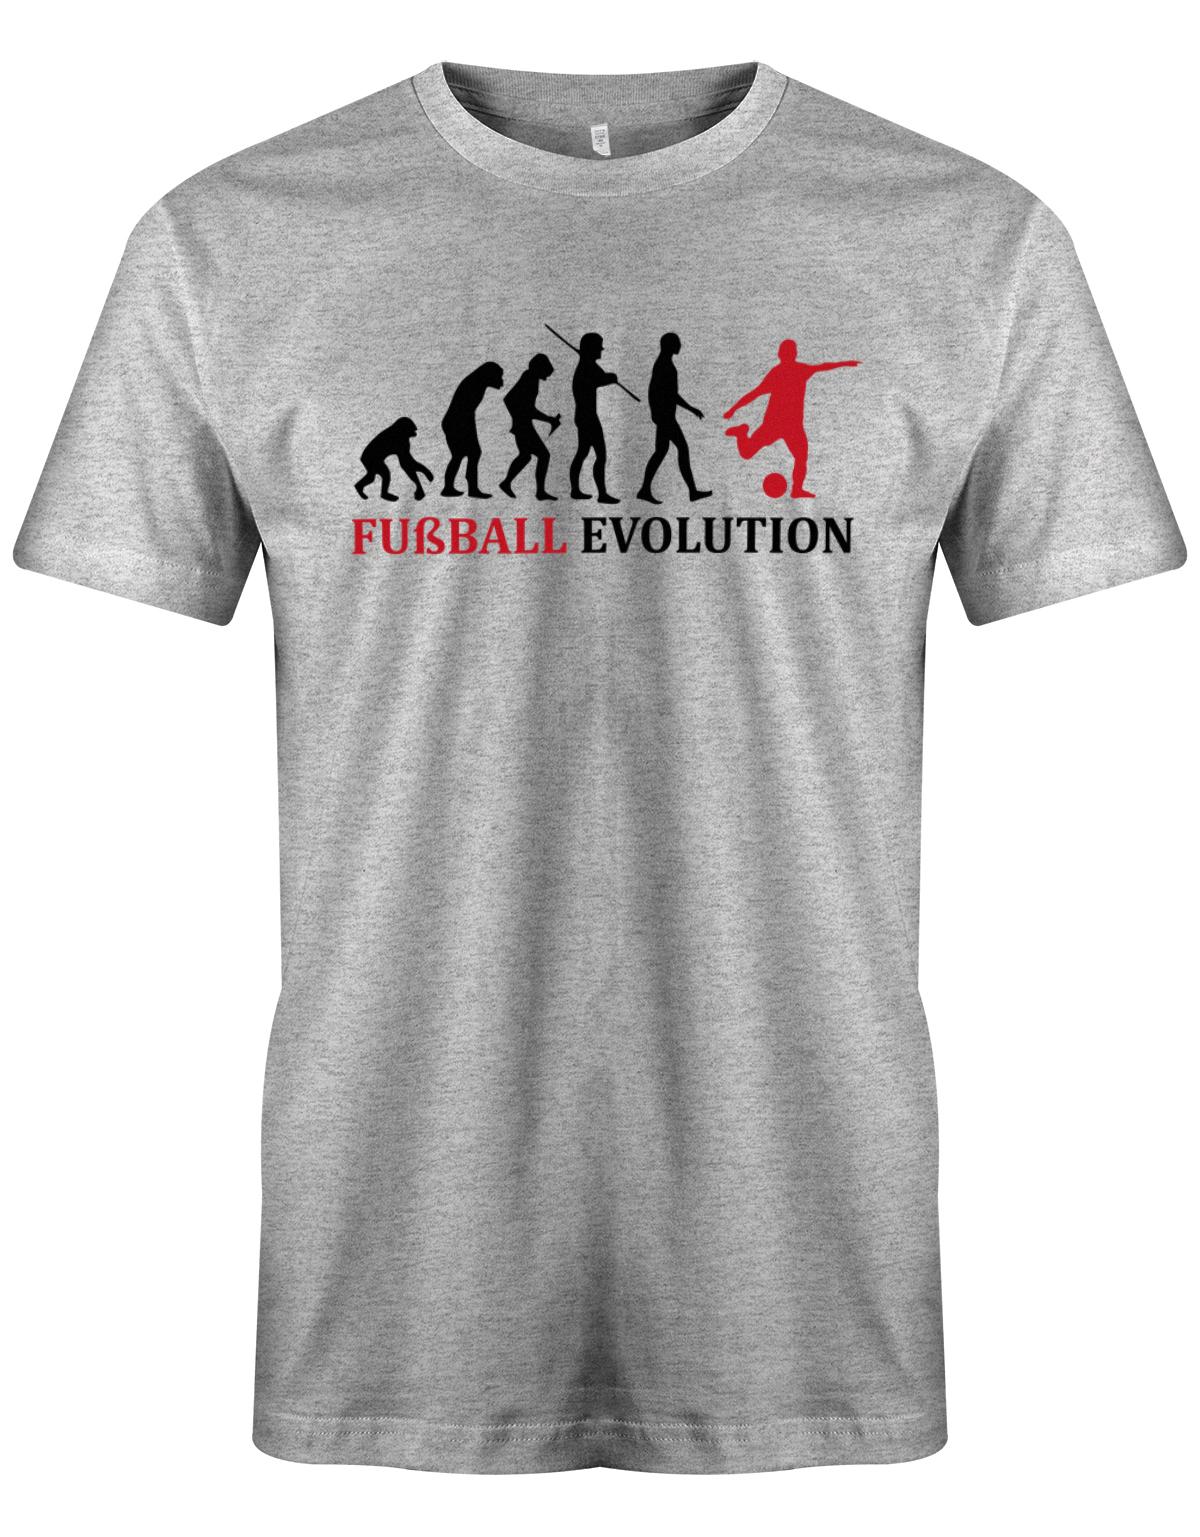 Fussball-Evolution-Herren-Shirt-Grau-Rot